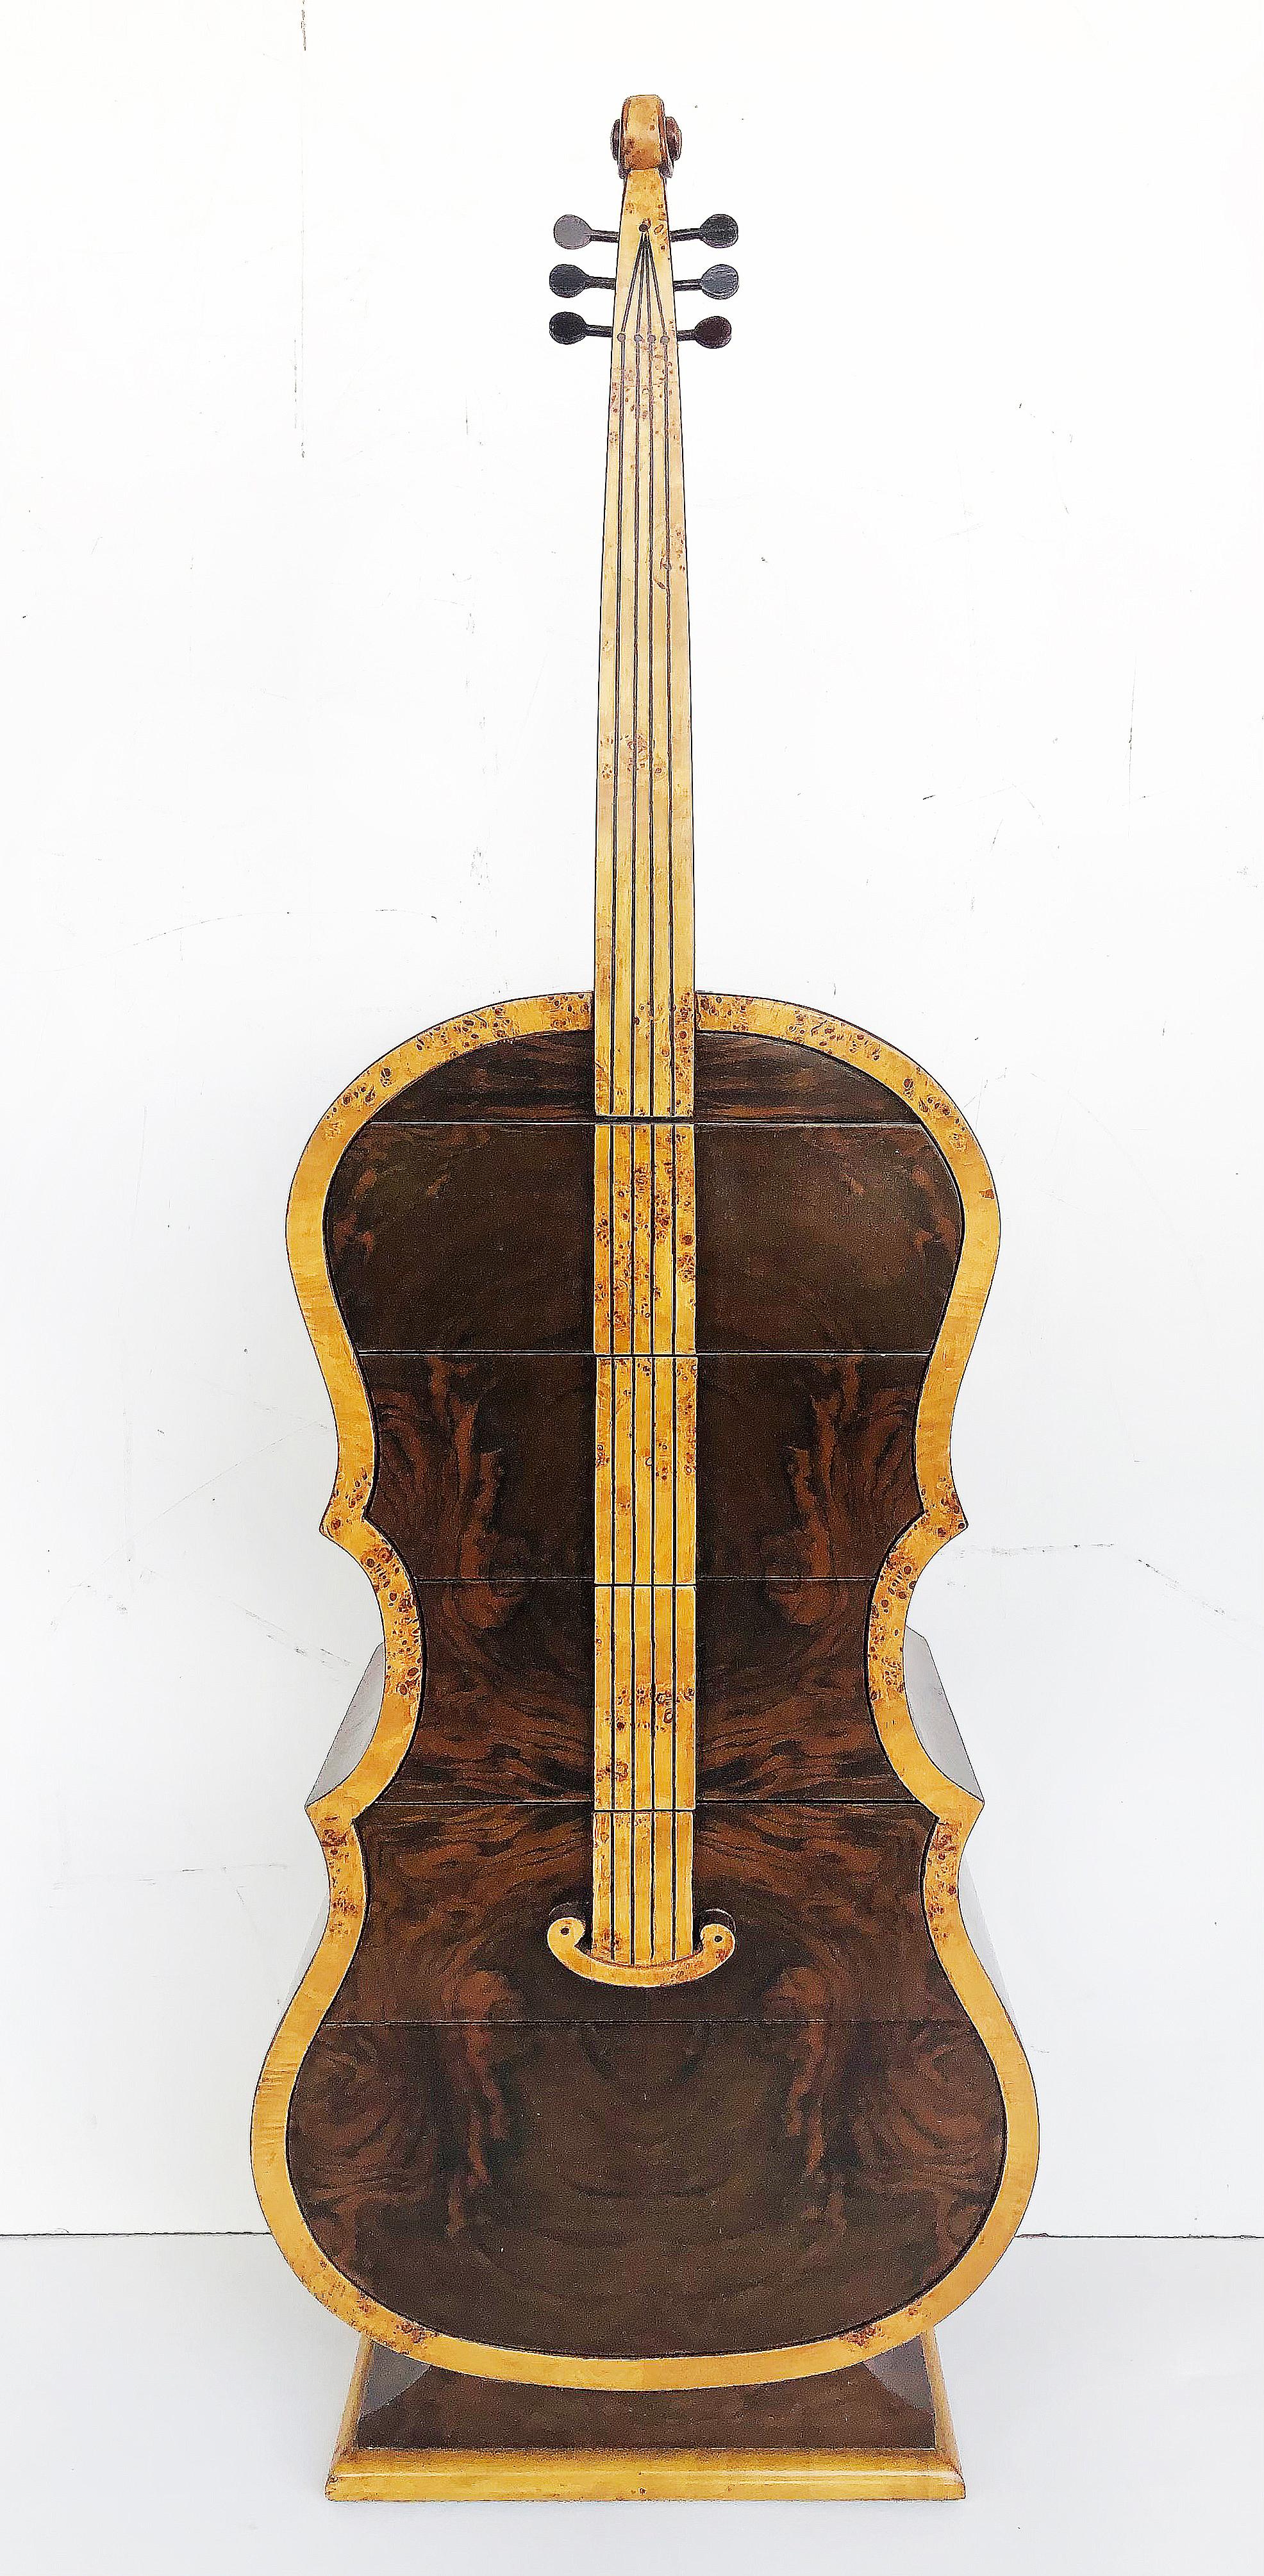 Ebonized Art Deco-Style Whimsical Burl Wood Cello Shaped Cabinet with Secret Compartment